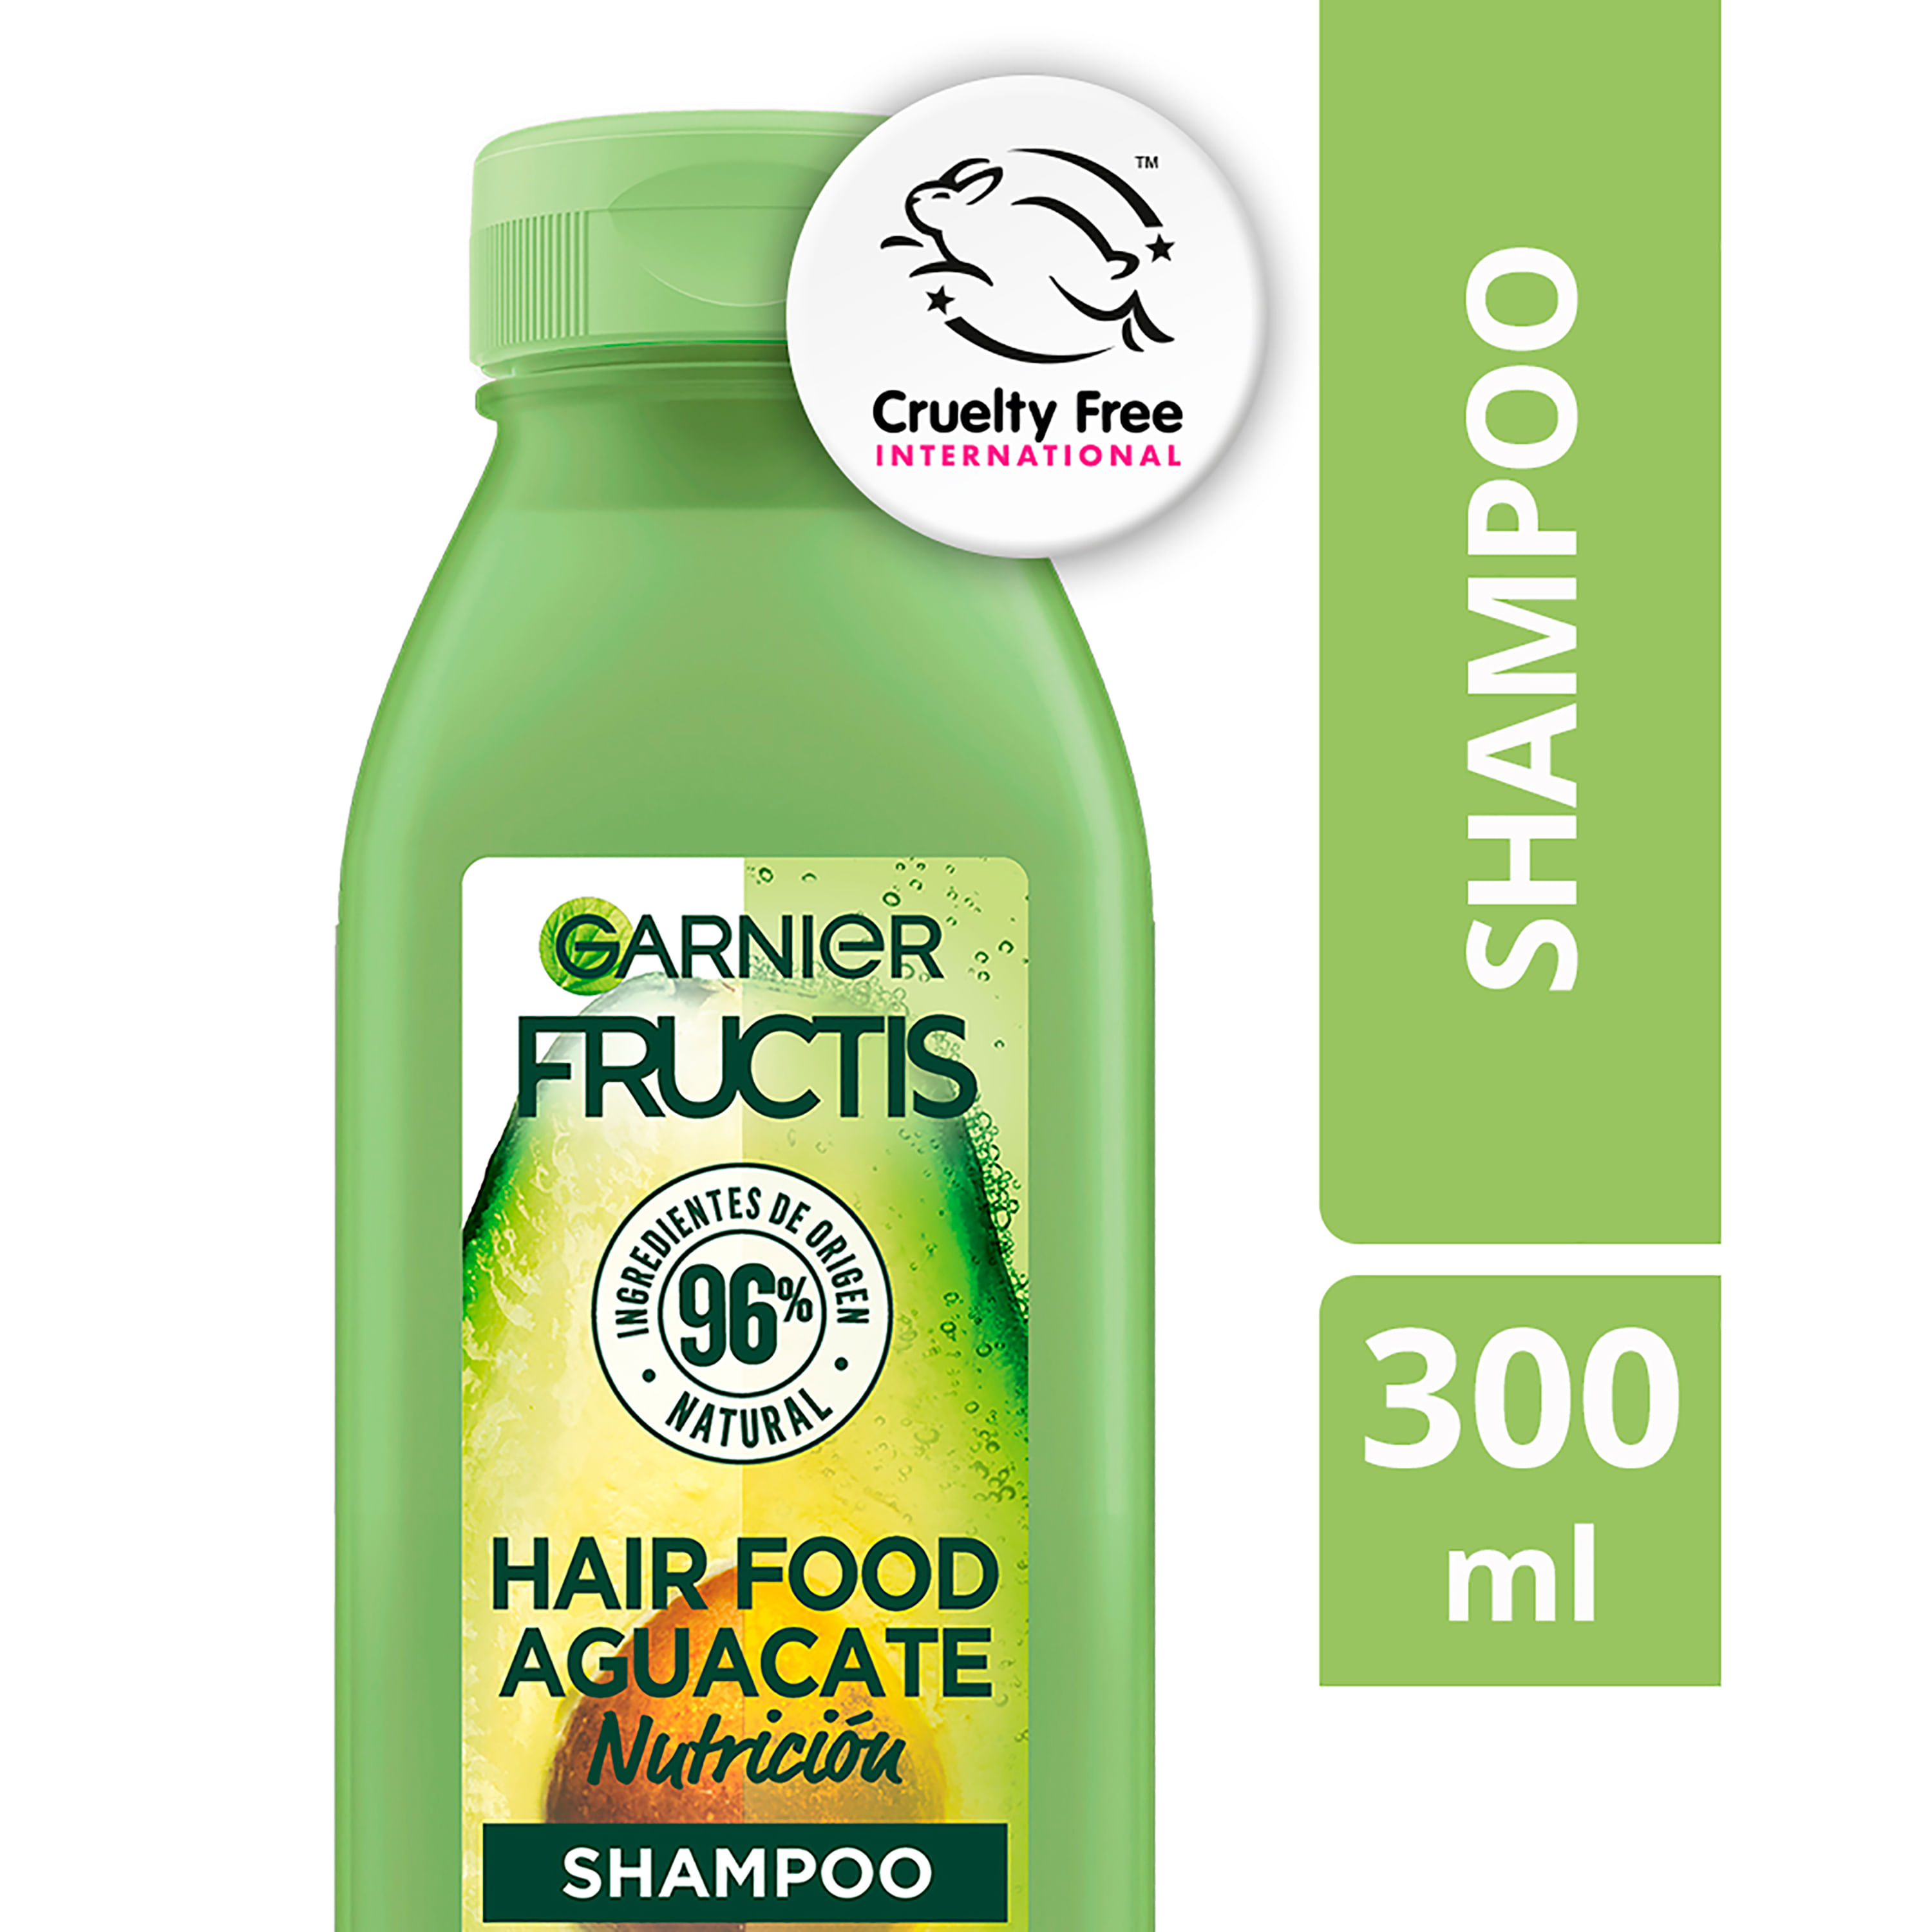 Shampoo-Hair-Food-De-Nutrici-n-Garnier-Fructis-Aguacate-300ml-1-38894